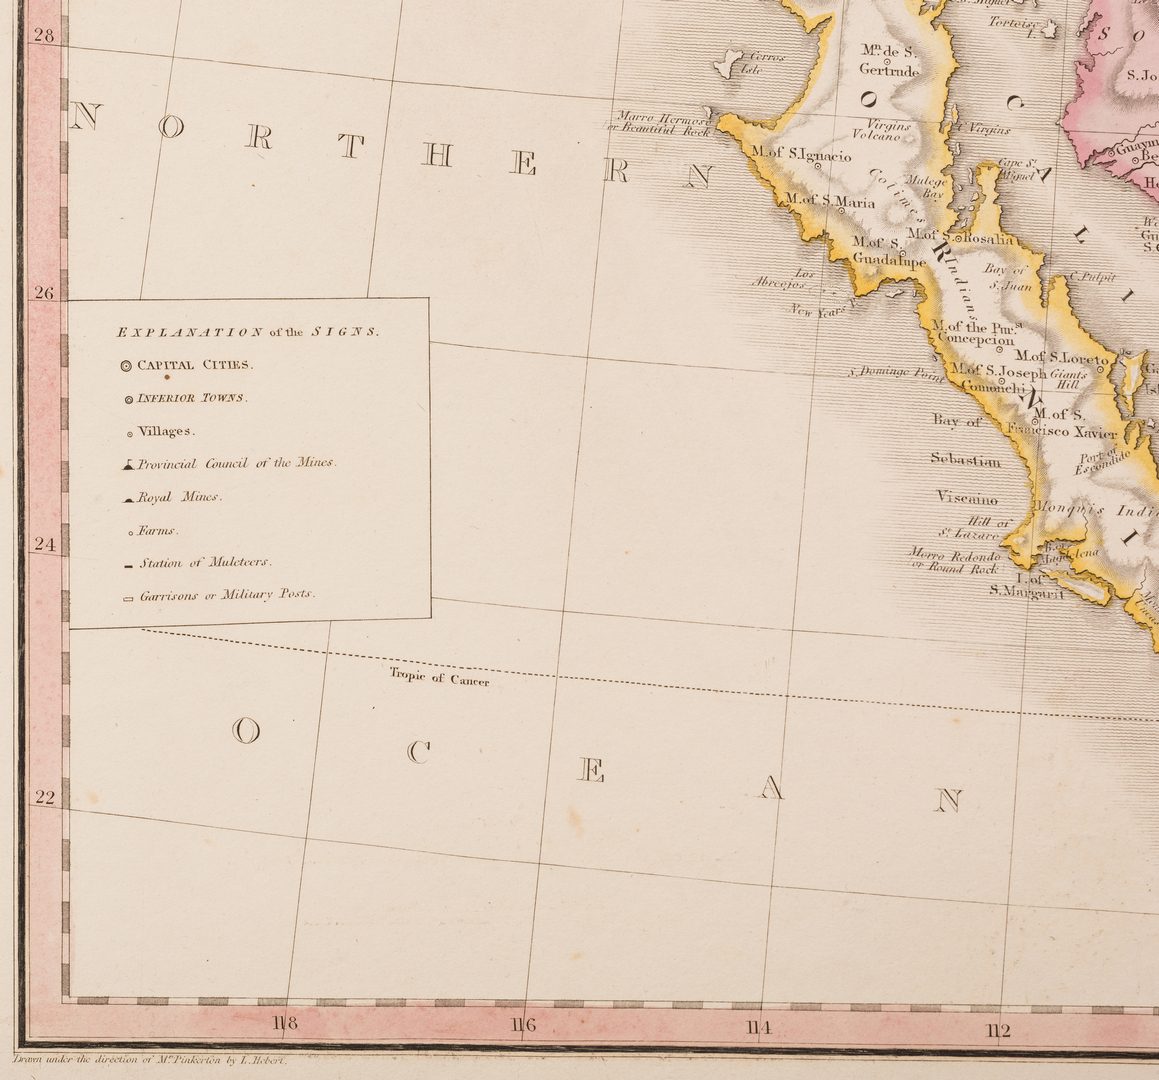 Lot 538: Spanish Dominions of N. Amer. Map, 1818 Pinkerton